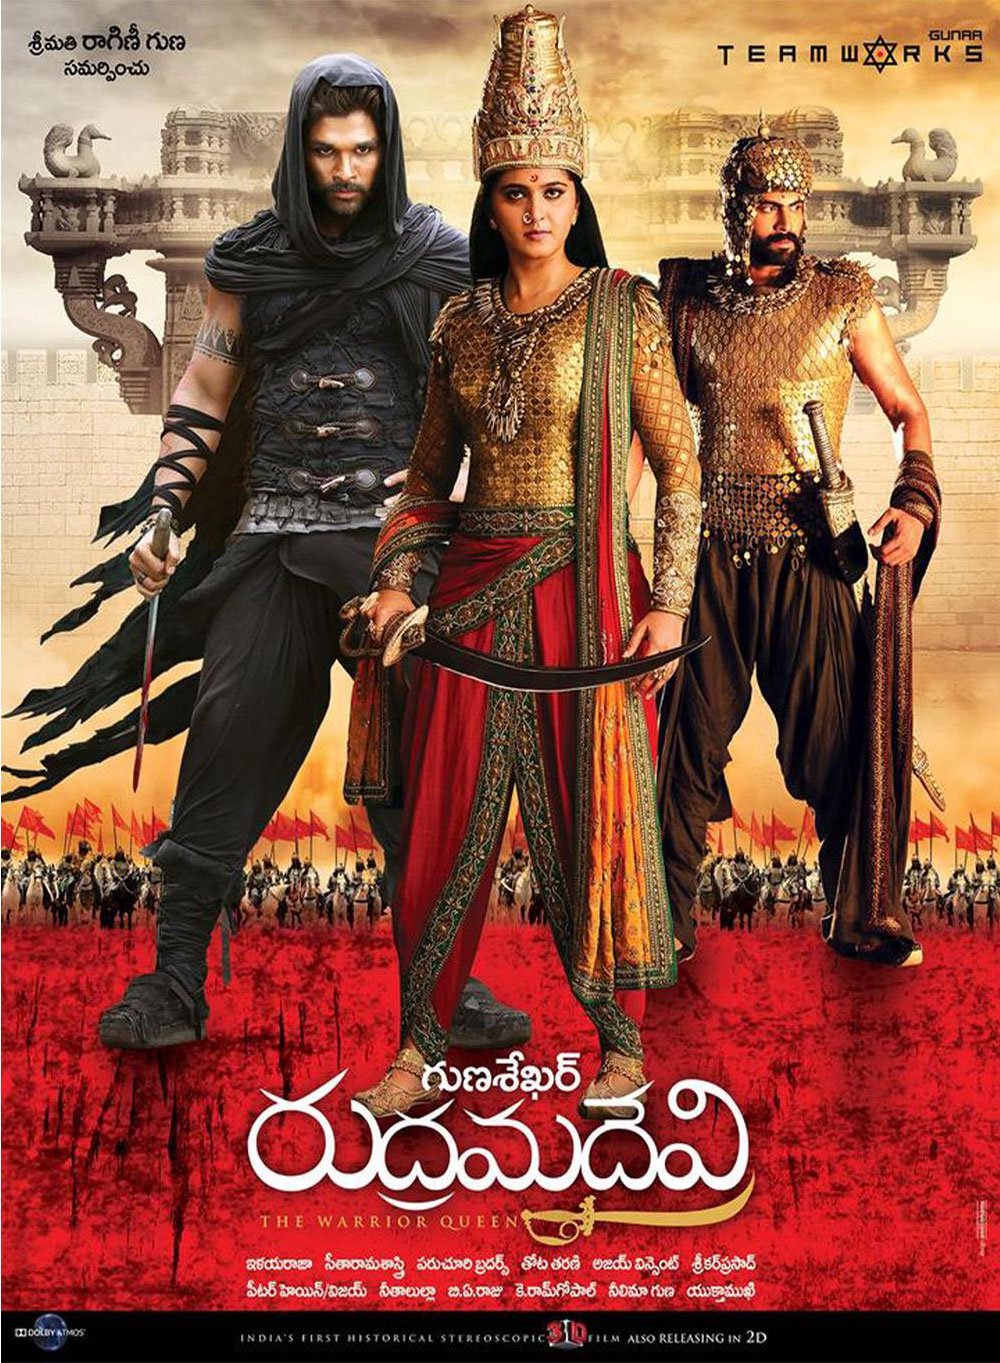 Telugu poster of the movie Rudhramadevi